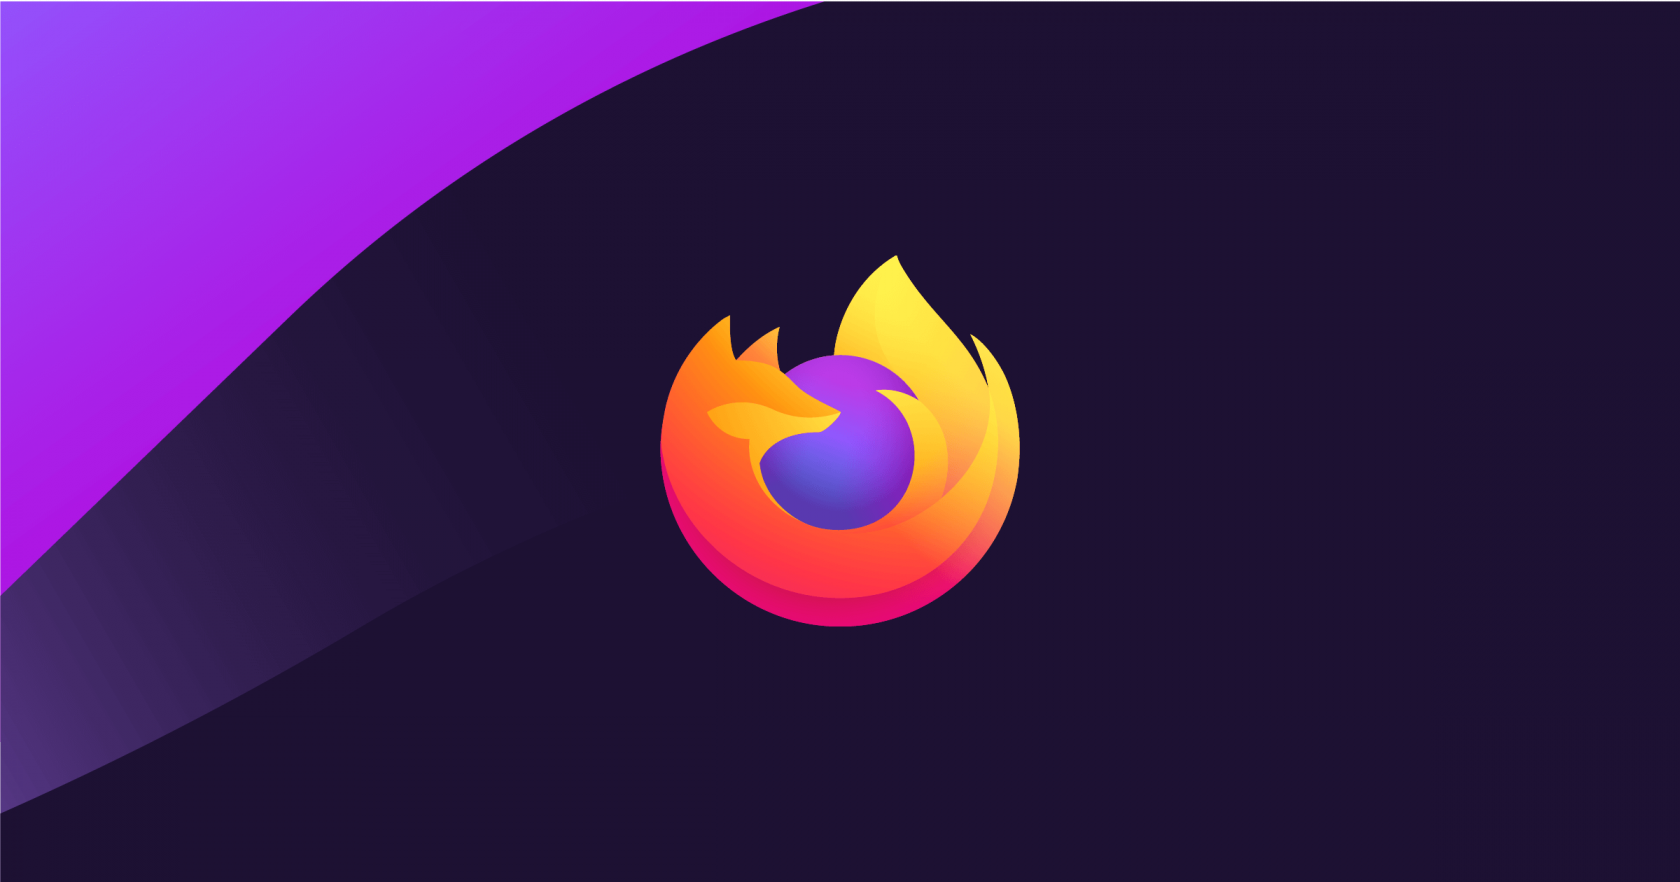 46 million of us remember left Firefox since 2018